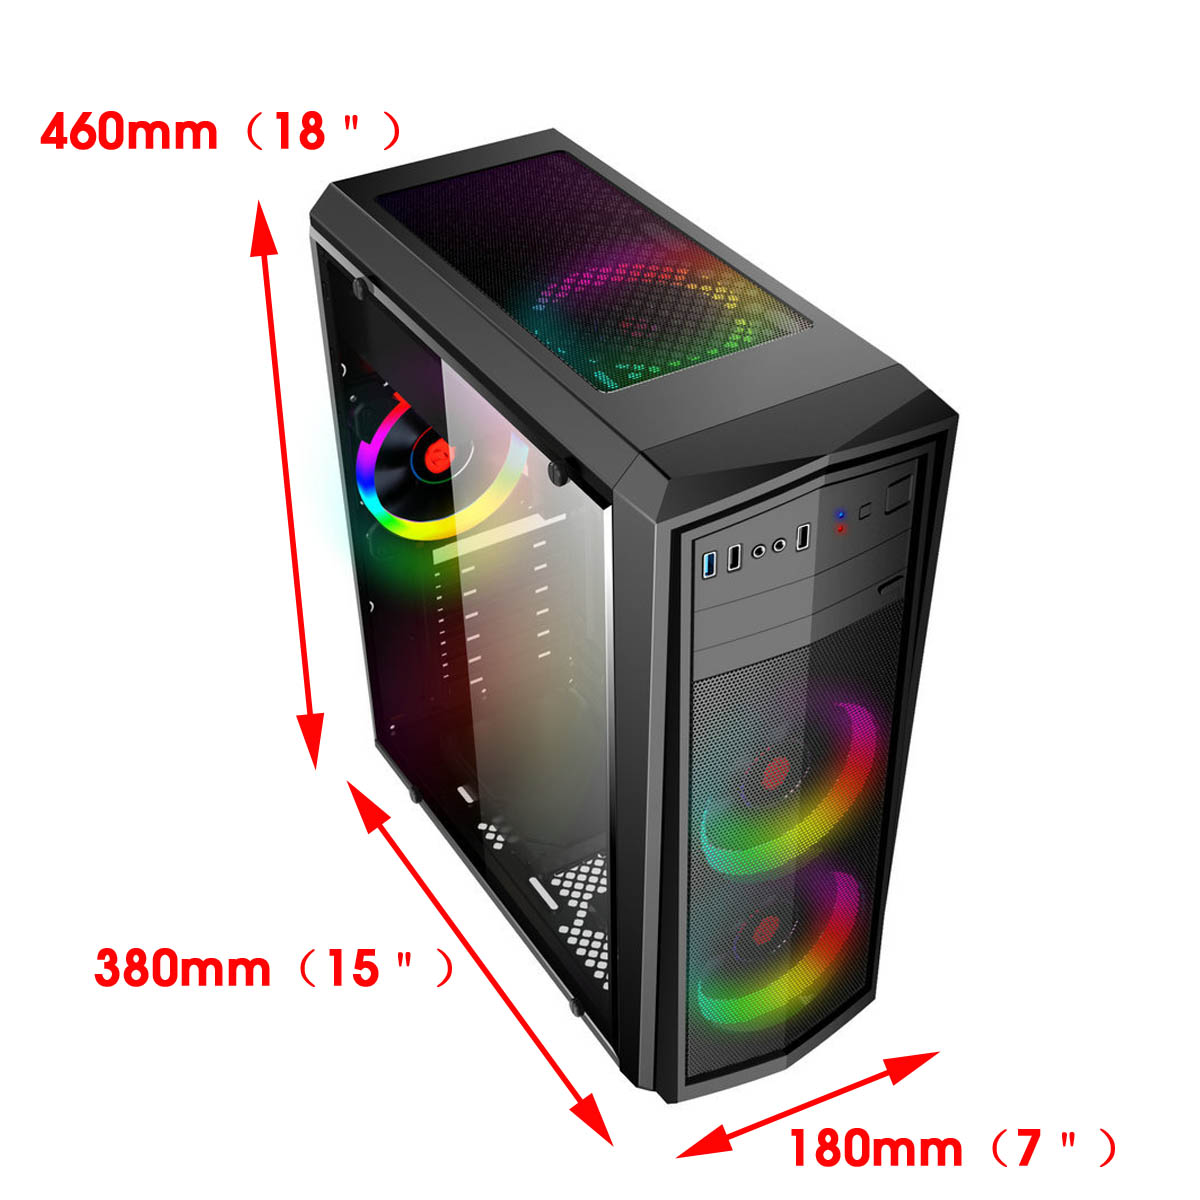 Transparent-Side-Panel-ATX-PC-Case-Desktop-Computer-Case-for-ATX-Micro-ATX-Mini-ITX-Motherboard-1420830